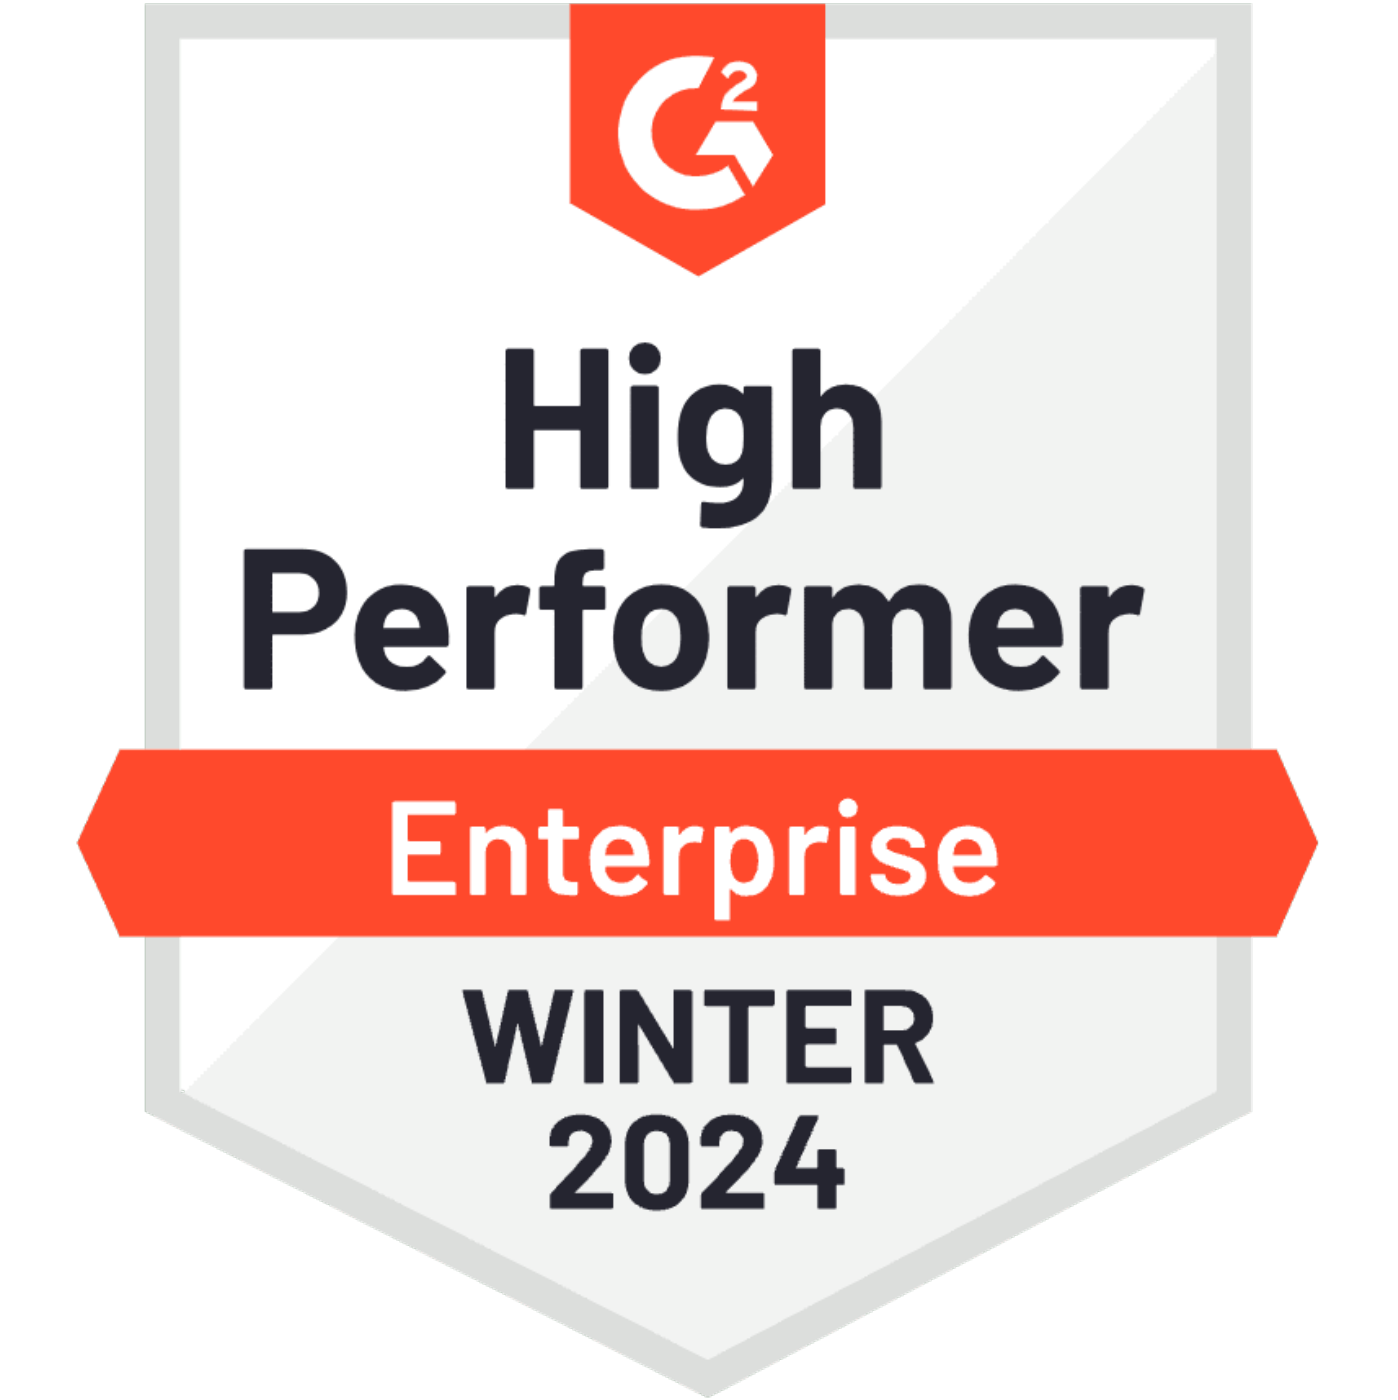 G2 Badge: High Performer Enterprise Winter 2024